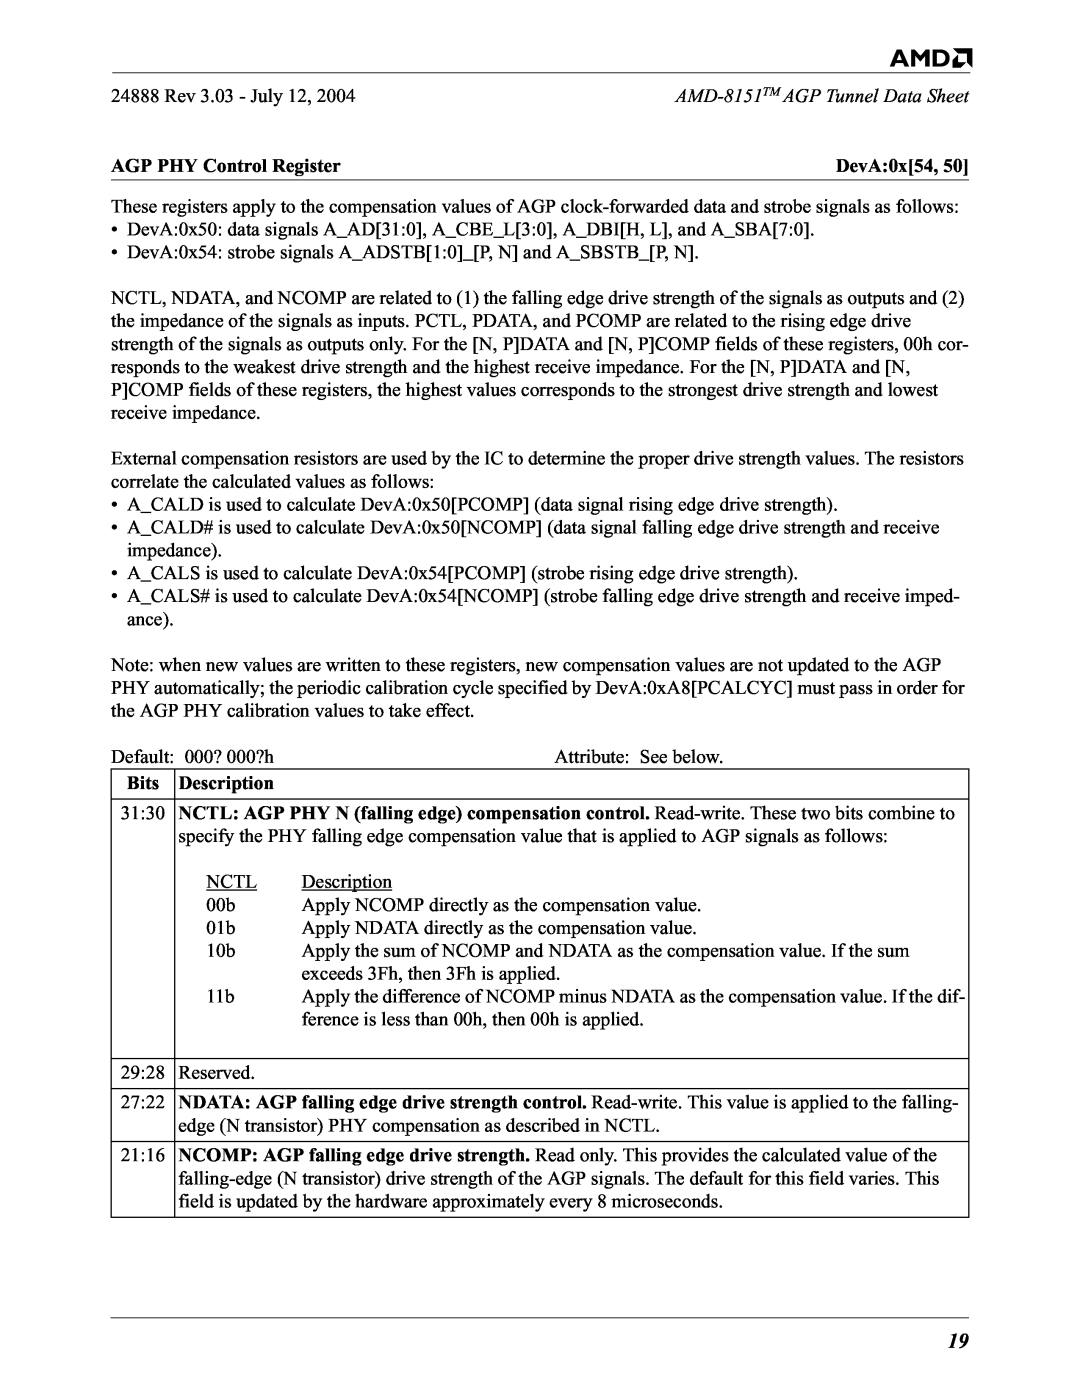 AMD 8151 specifications Rev 3.03 - July, AGP PHY Control Register, DevA, Description 